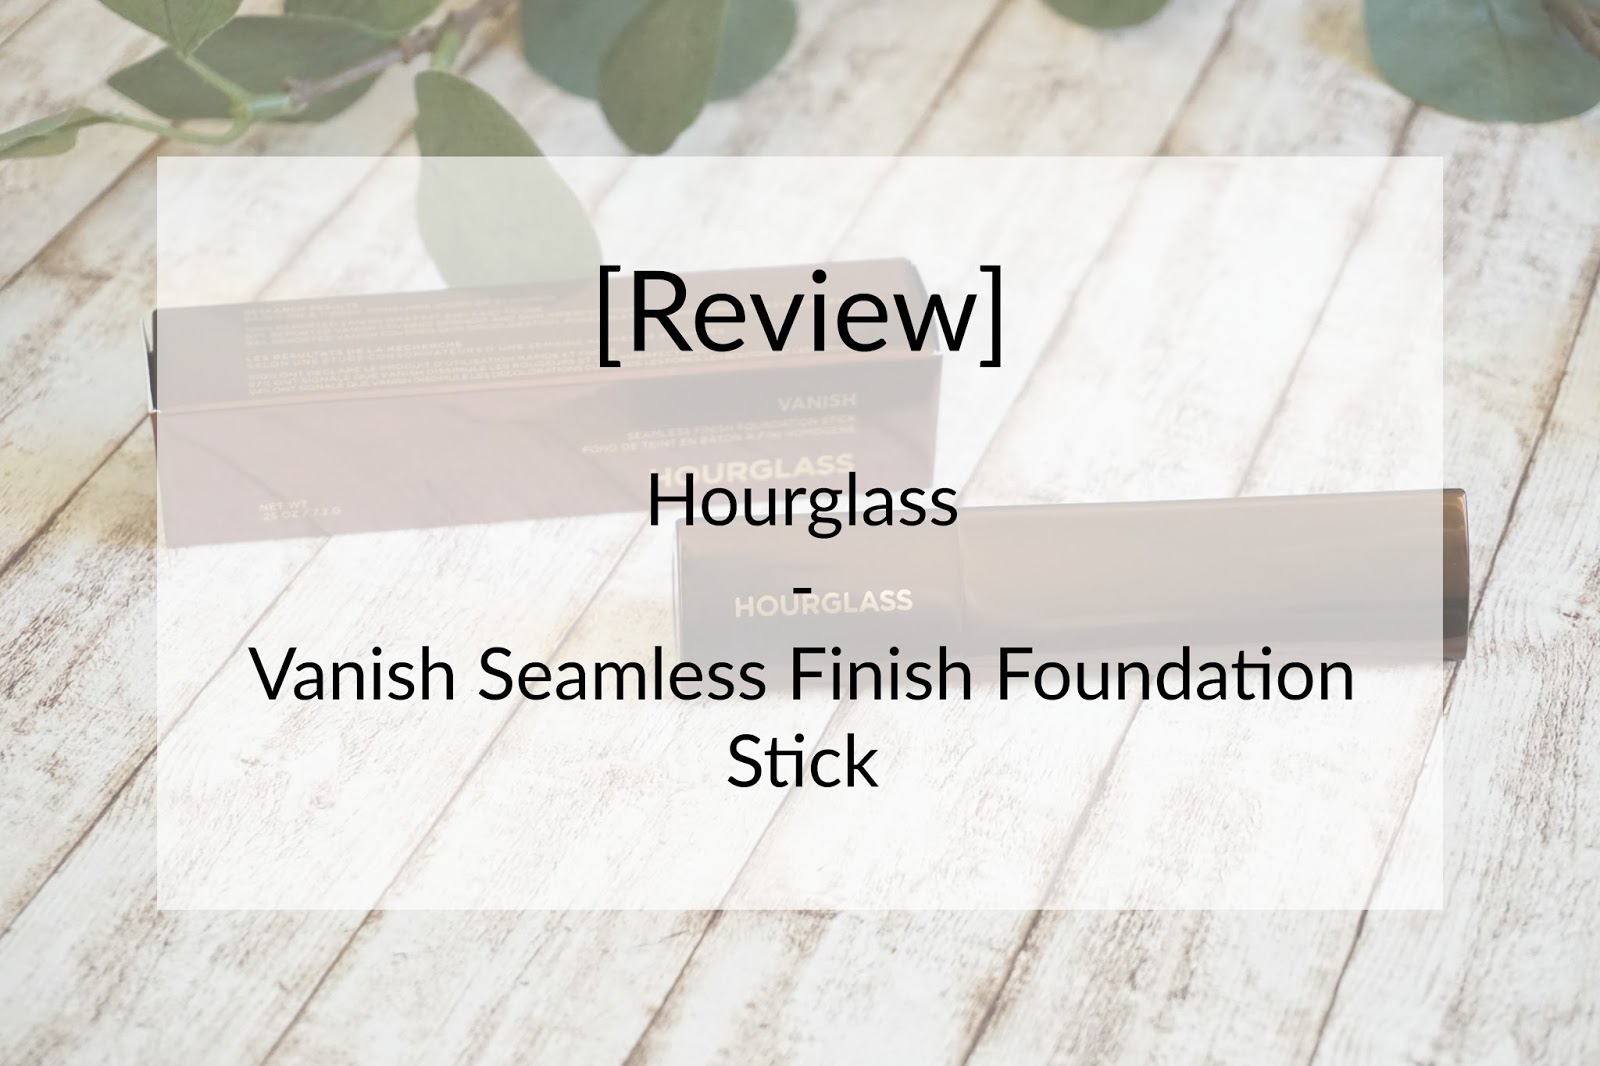 Review Hourglass Vanish Seamless Finish Foundation Stick